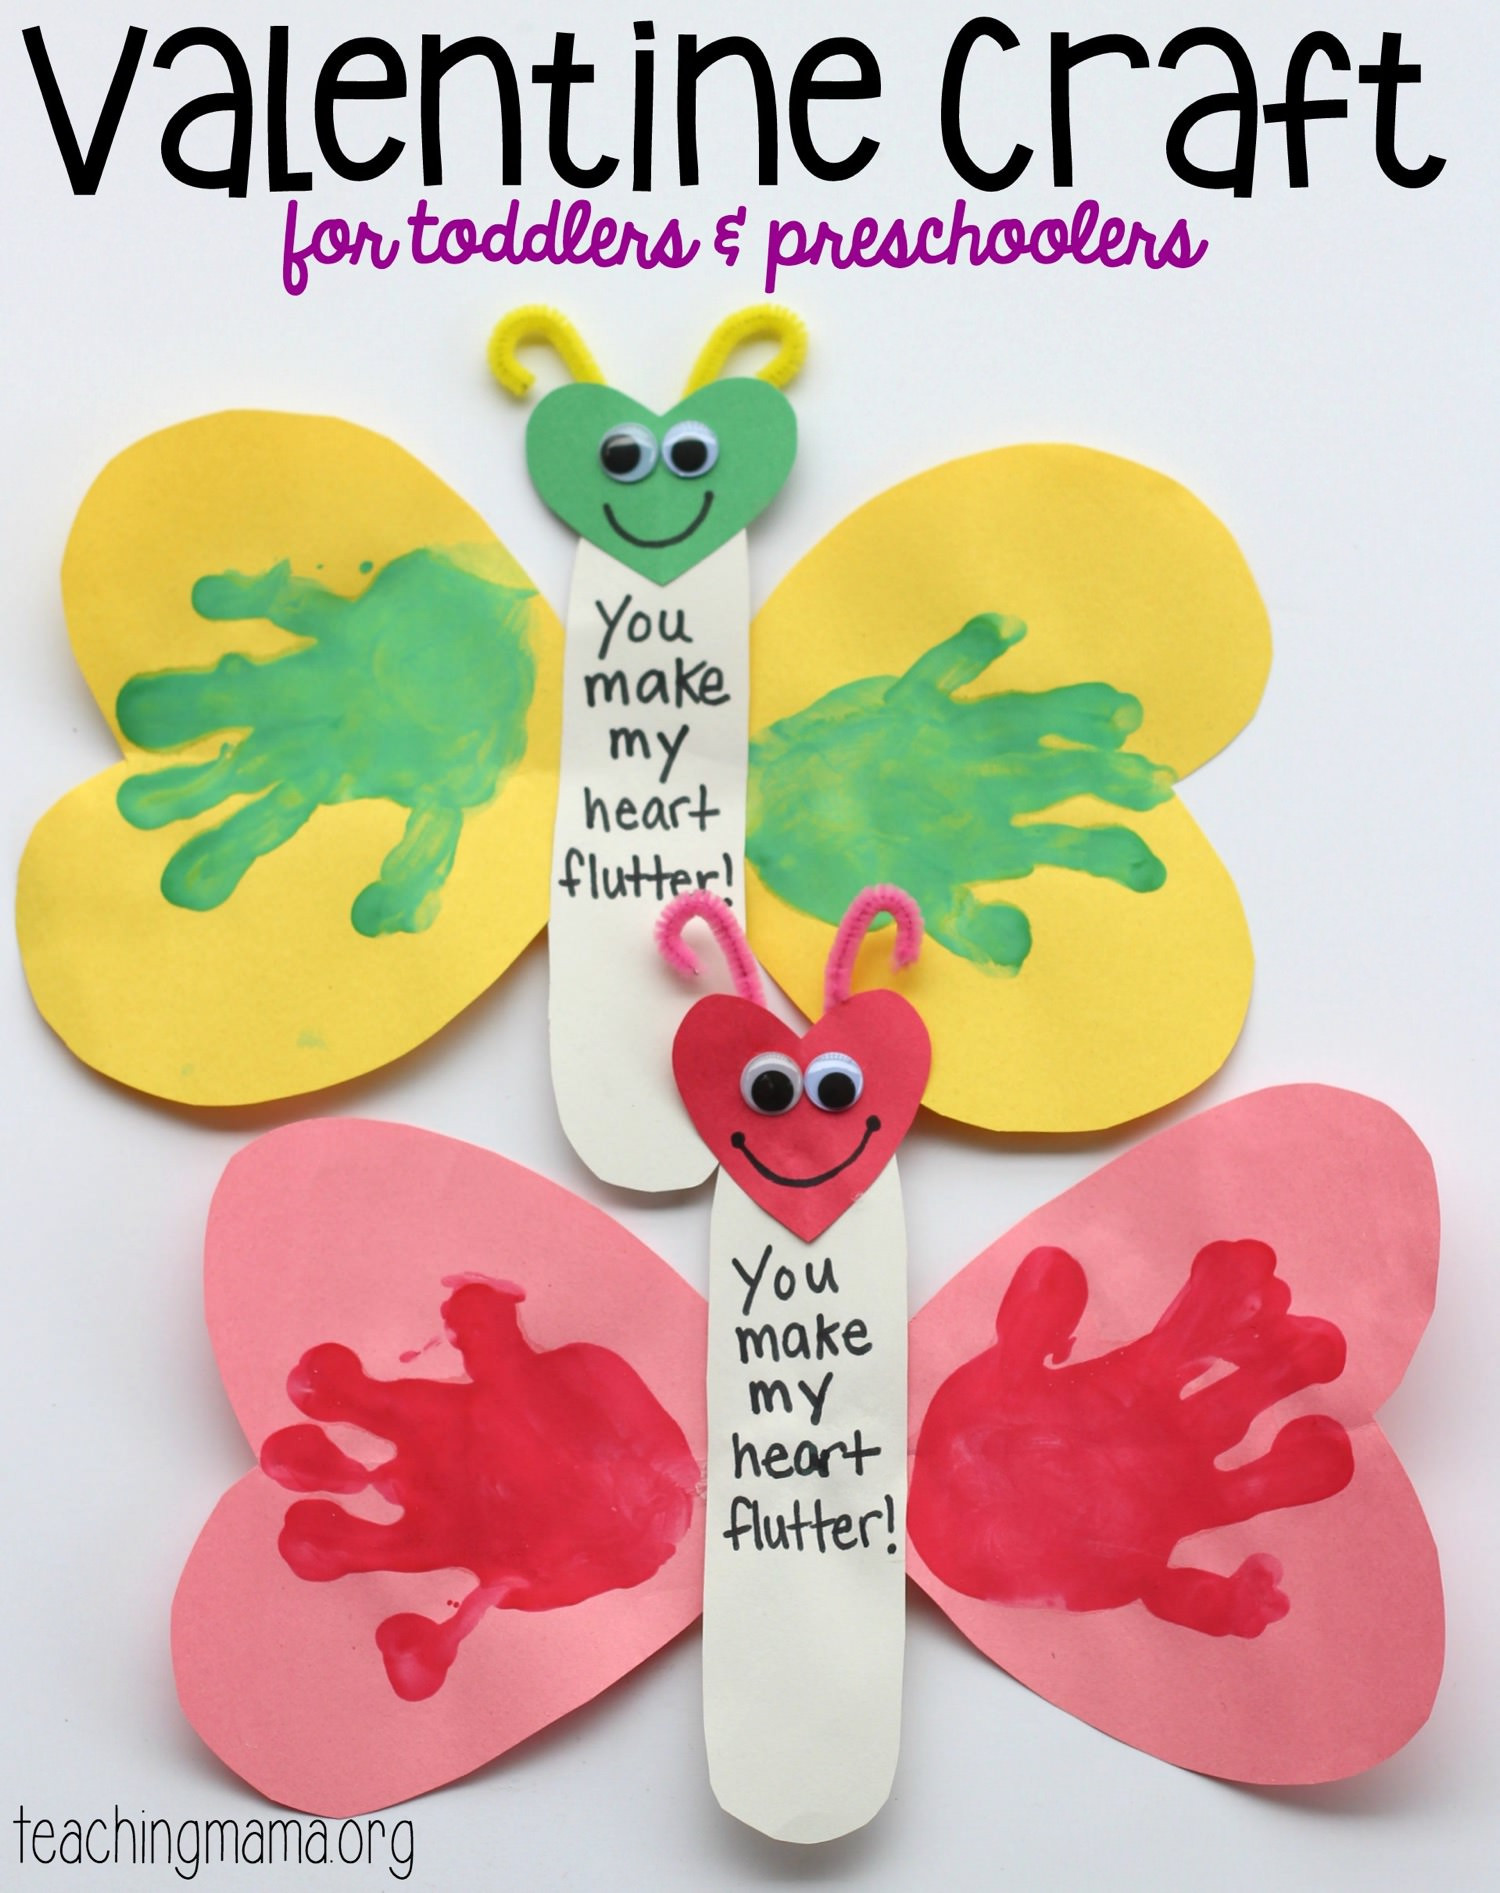 Best ideas about Toddler Valentine Craft Ideas
. Save or Pin You Make My Heart Flutter Valentine Craft Now.